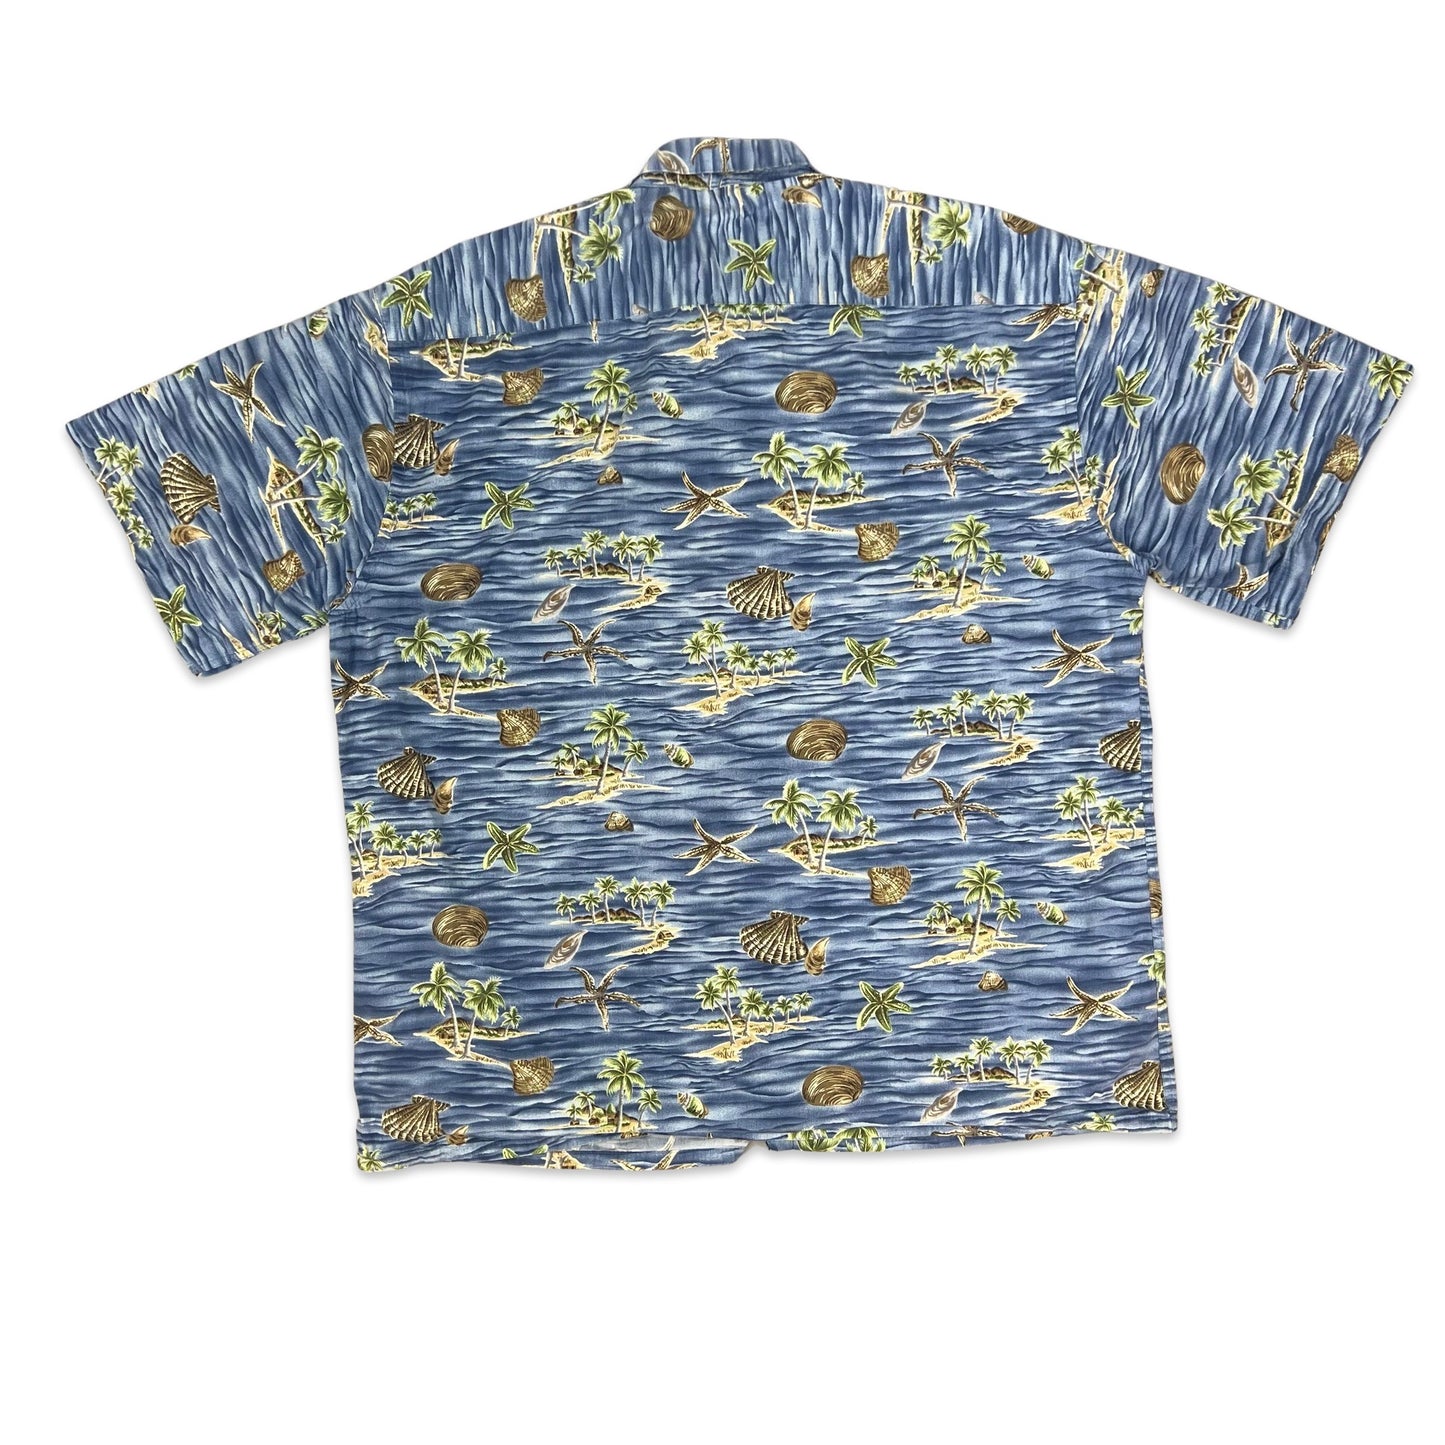 Vintage Island Theme Print Blue Hawaiian Shirt XL XXL